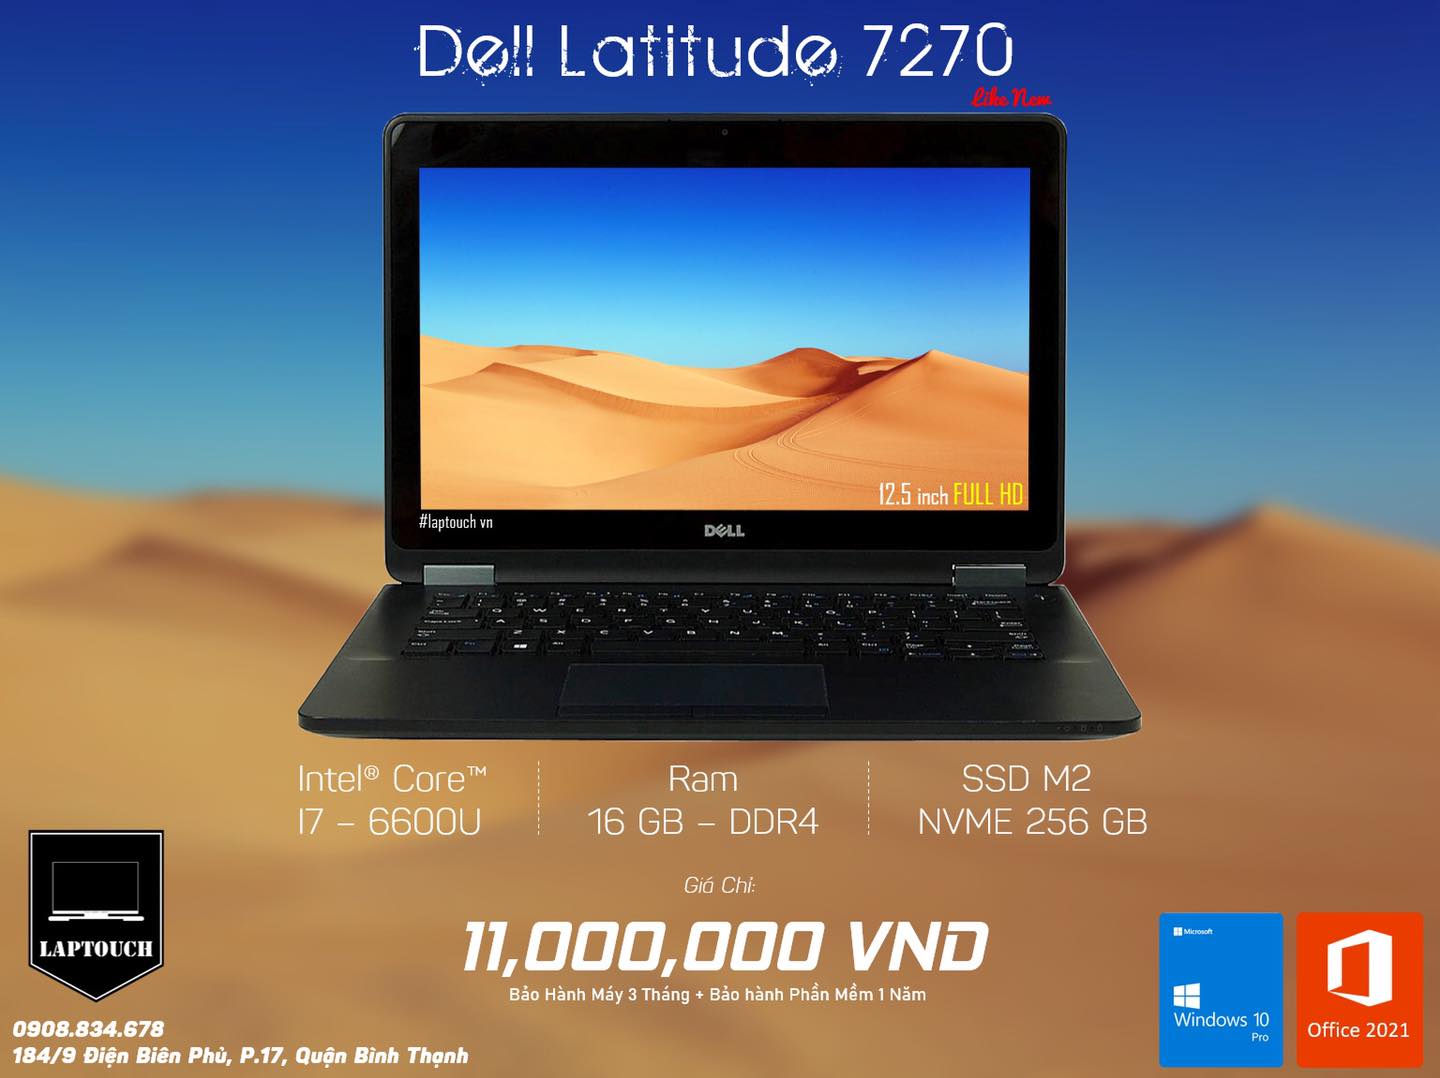 Dell Latitude 7270 [ Like New ]